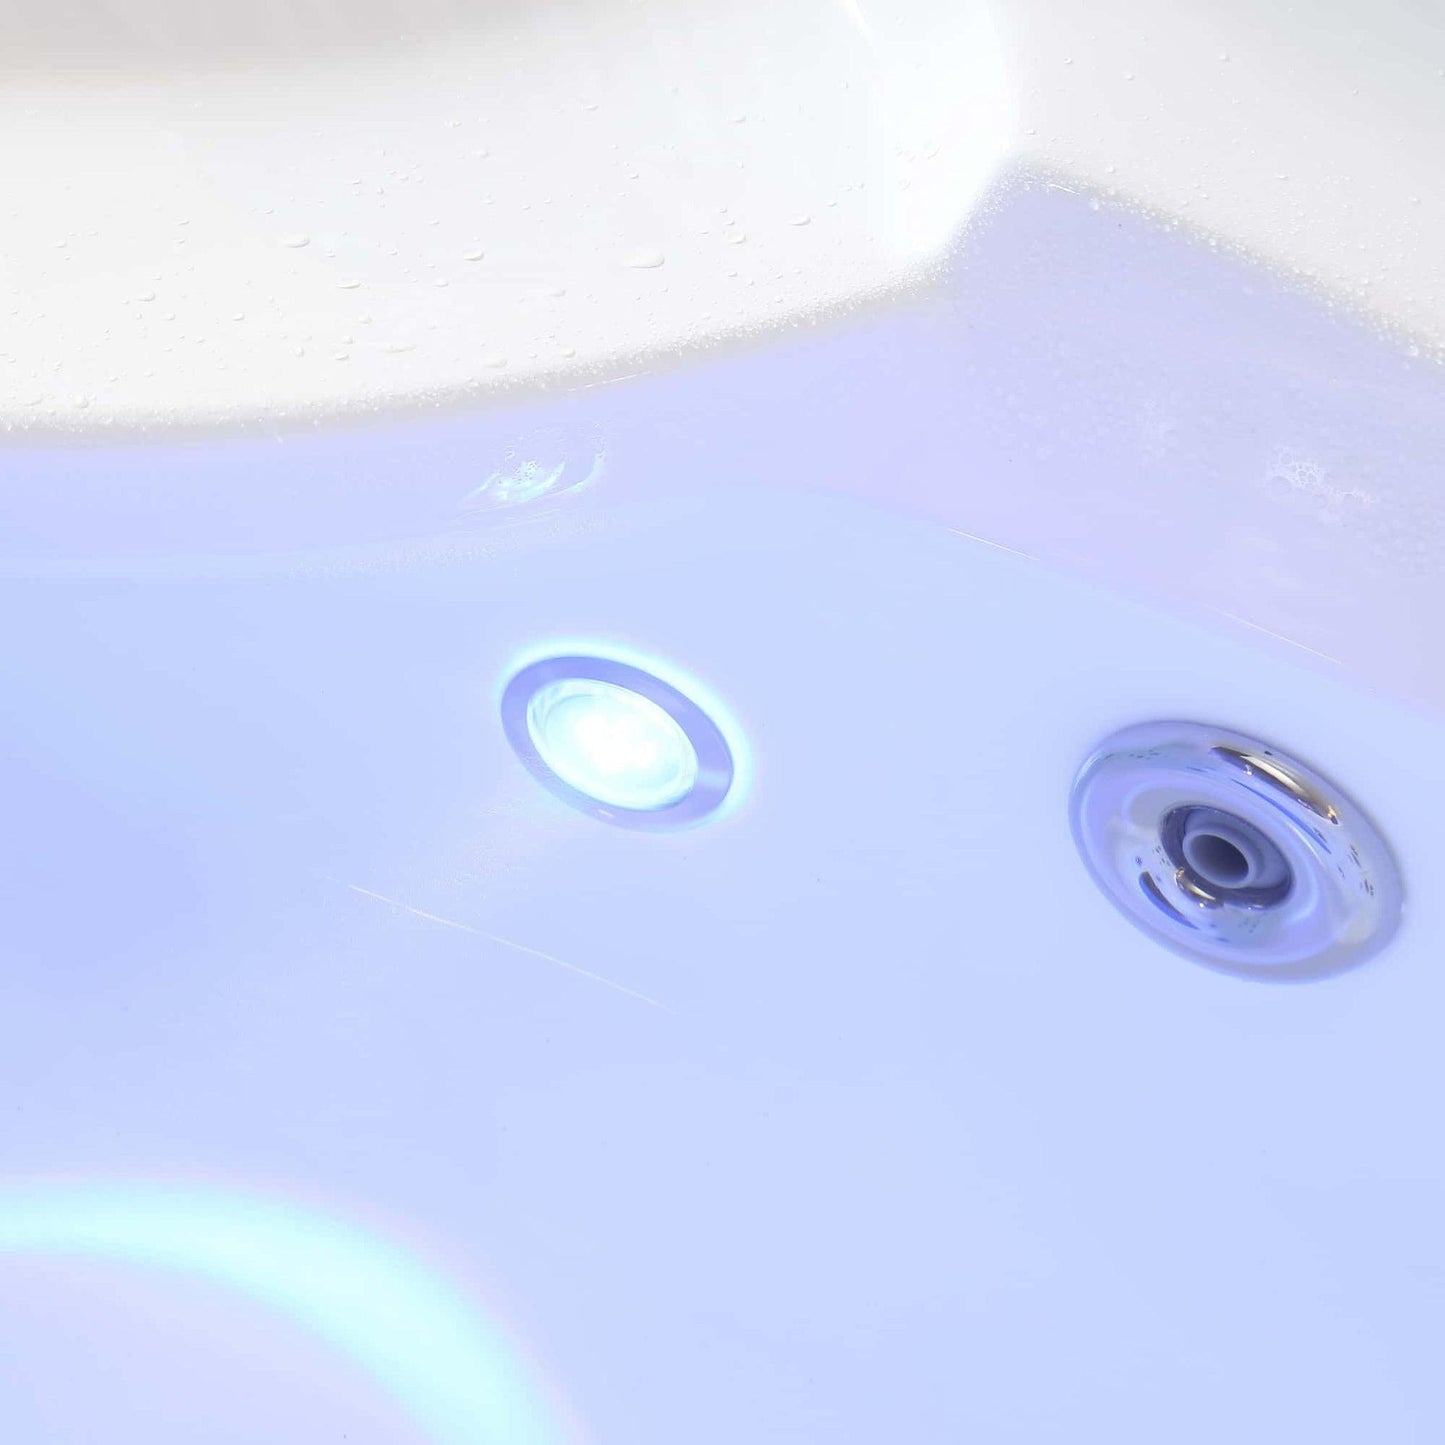 Empava 59" 2-Person Corner Acrylic Whirlpool Bathtub With Thermostat